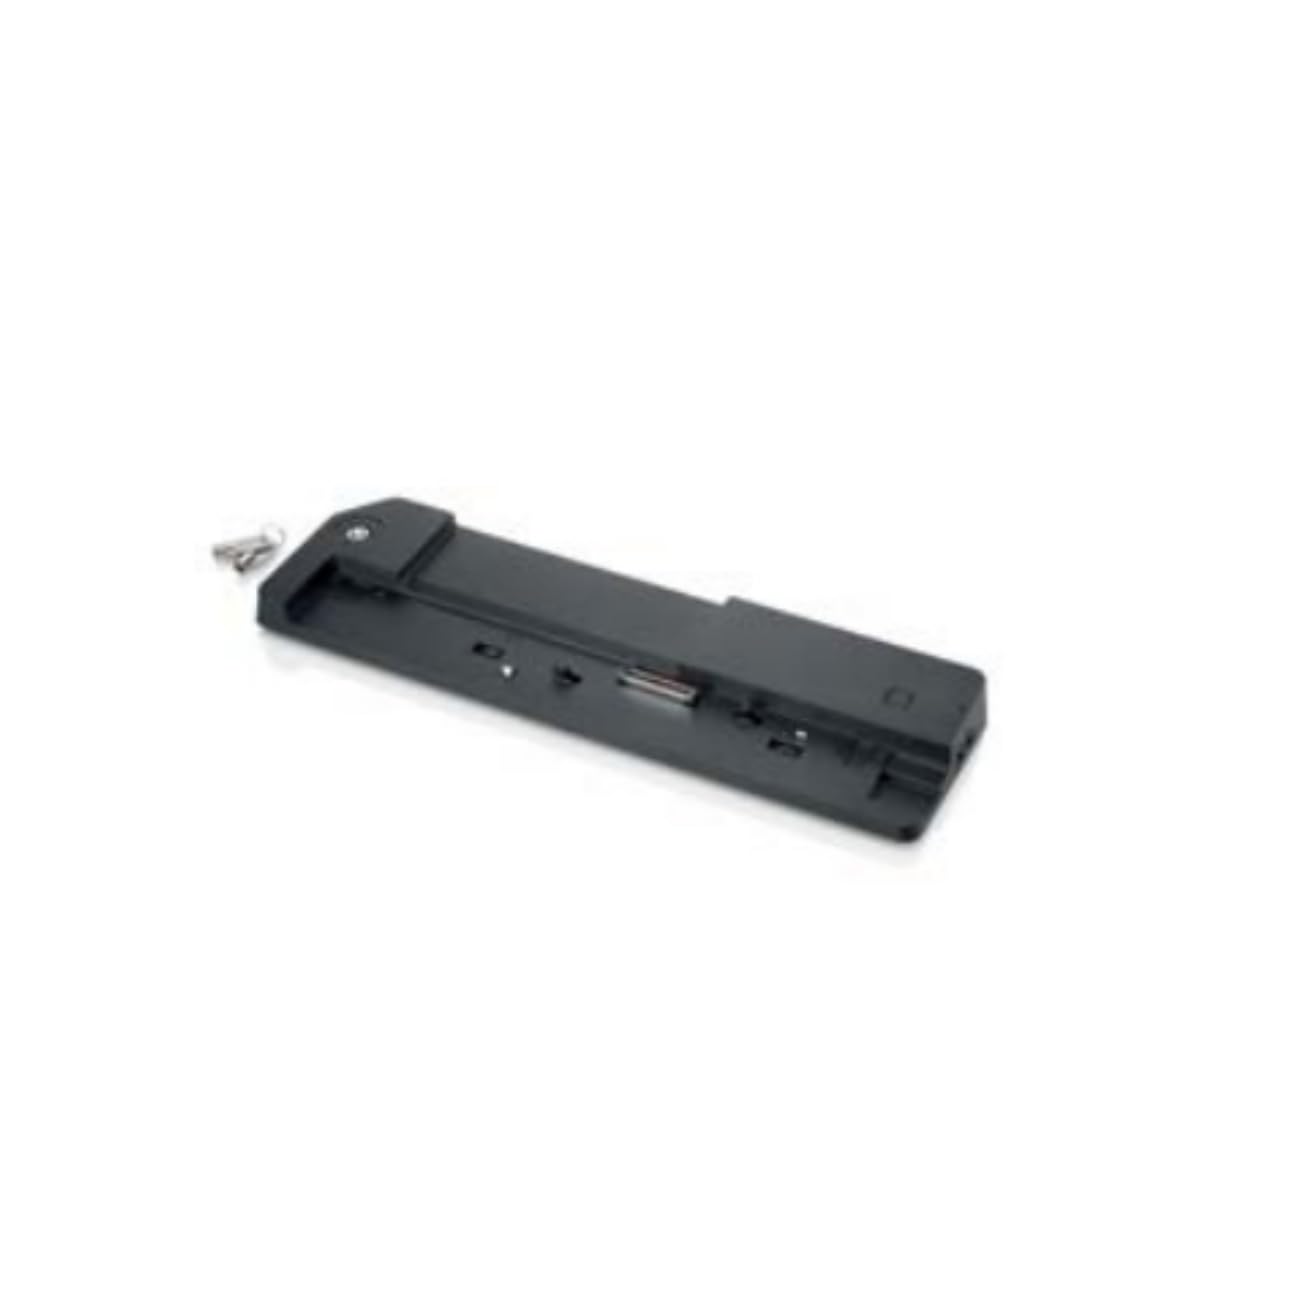 Fujitsu Port Replicator AC Adapter EU-Cable Kit incl. Key Lock LIFEBOOK U7x7 Series